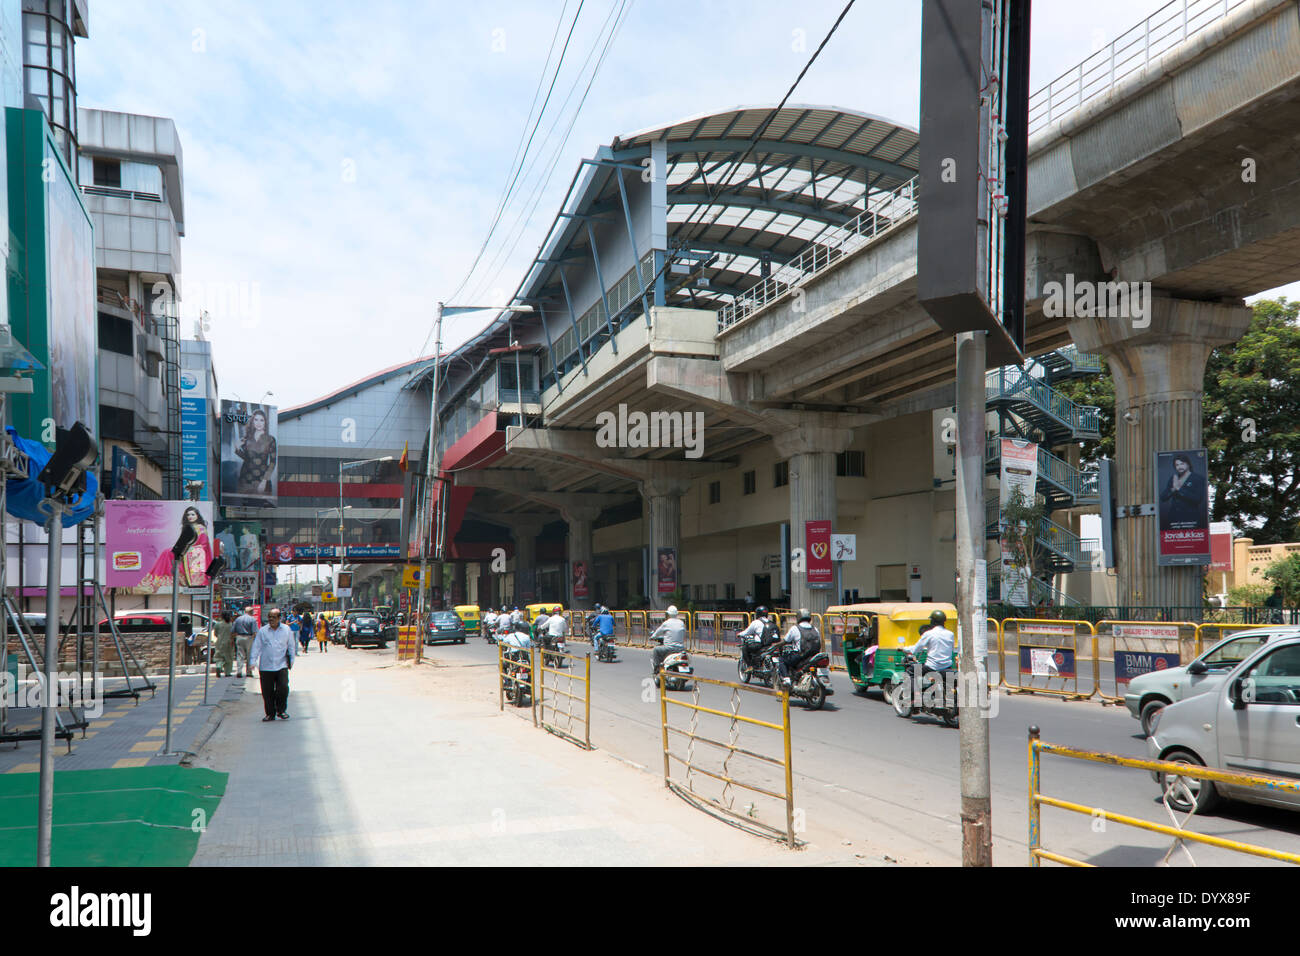 A street scene showing people and traffic by the Metro Station on MG (Mahatma Gandhi) Road in Bangalore, Karnataka, India Stock Photo